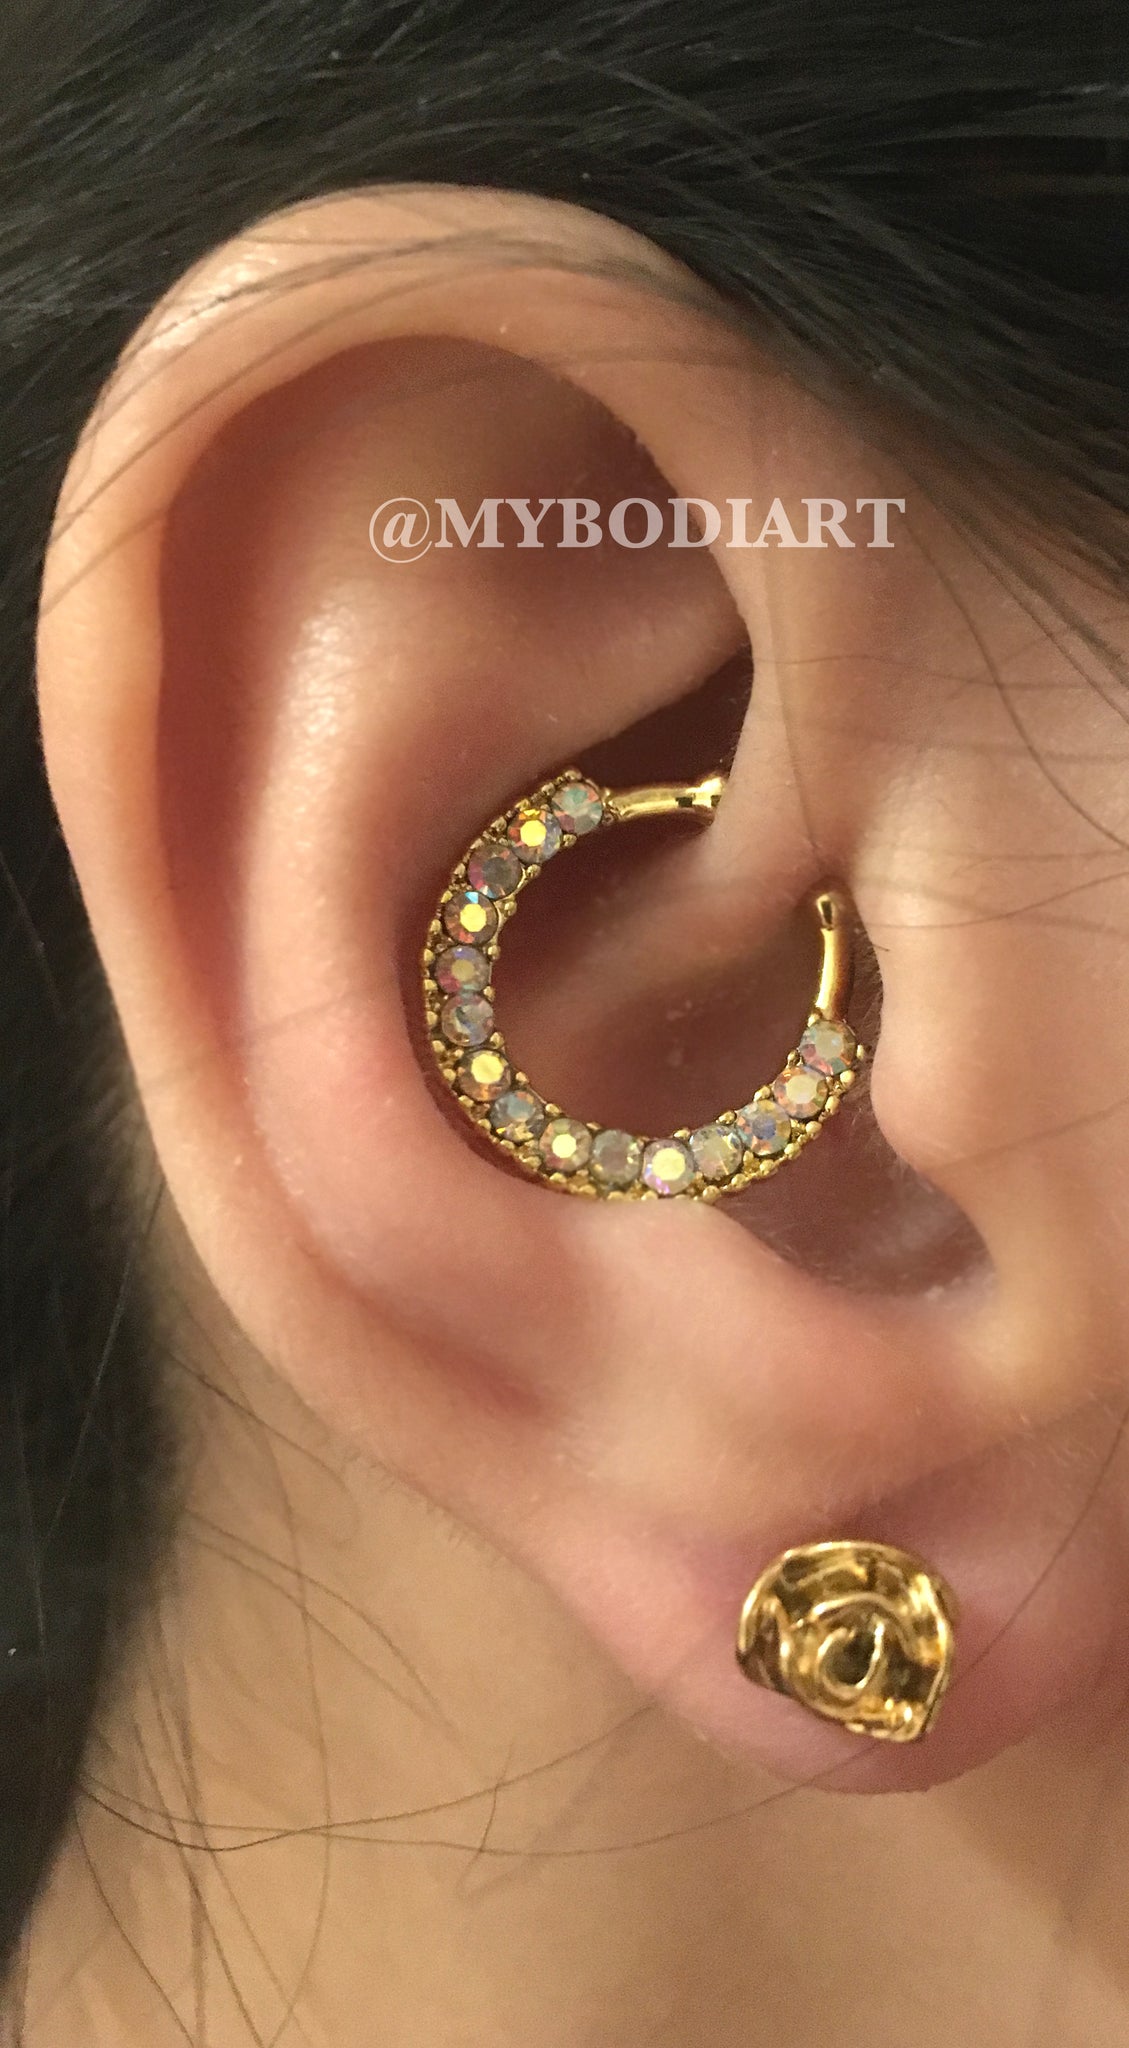 Gold Ear Piercing Ideas - Rose Earring Stud - Cartilage Daith Rook Ring Hoop - www.MyBodiArt.com